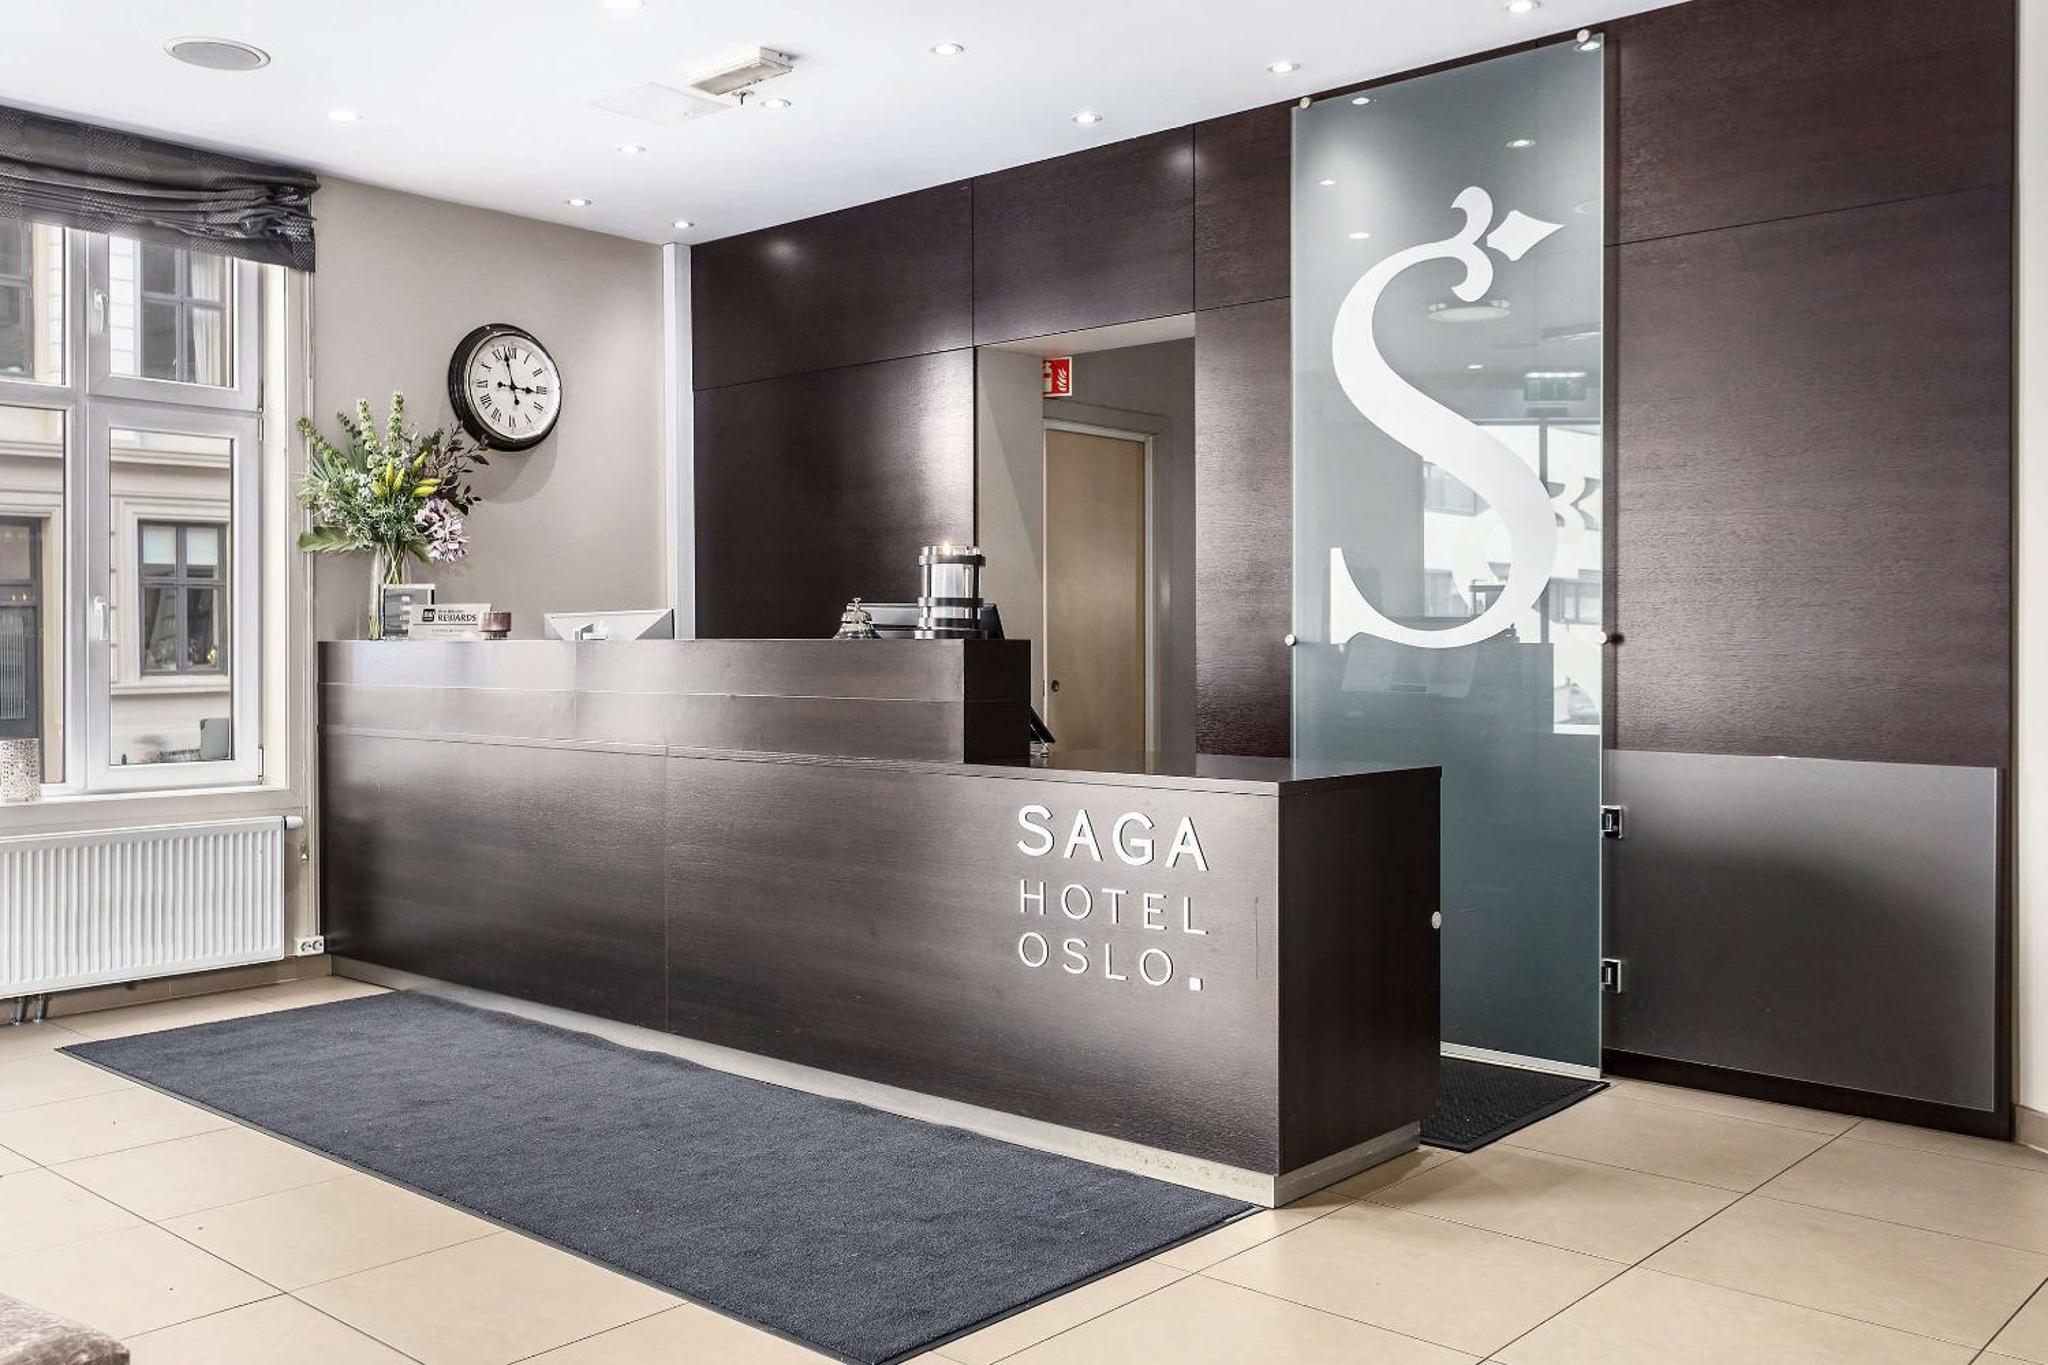 Saga Hotel Oslo